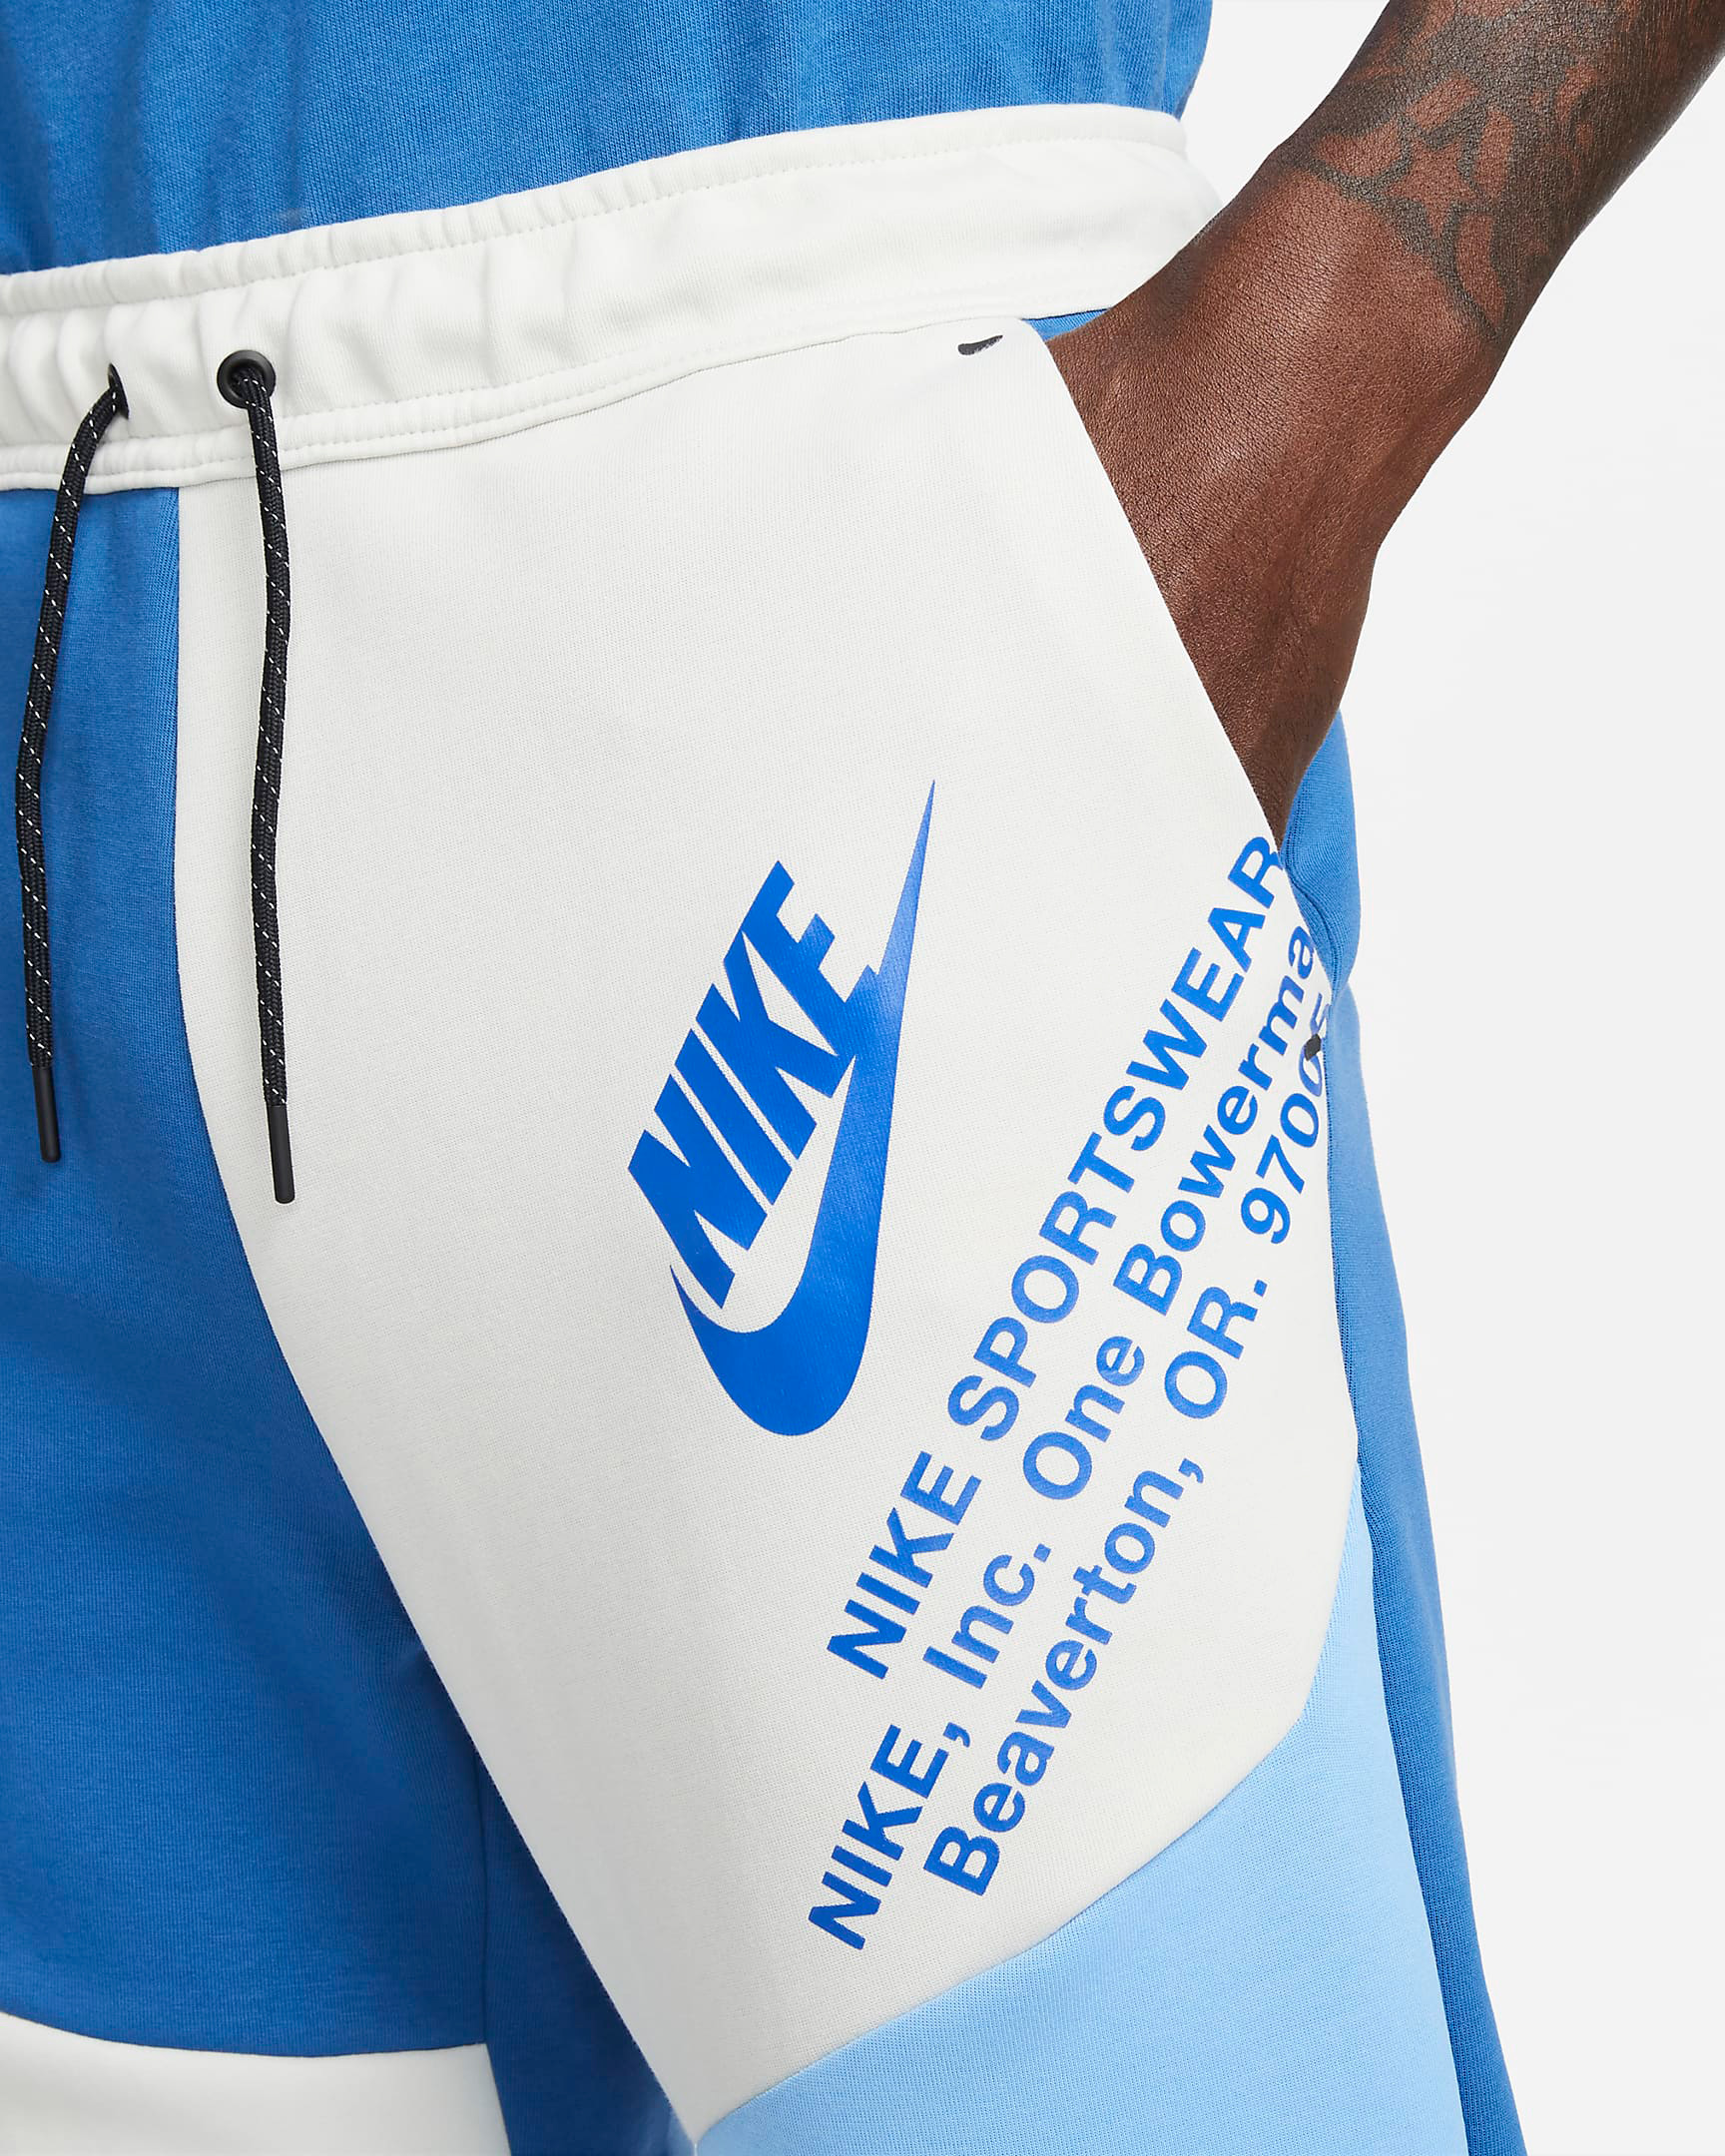 Nike Tech Fleece Pants Dark Marina Blue University Blue